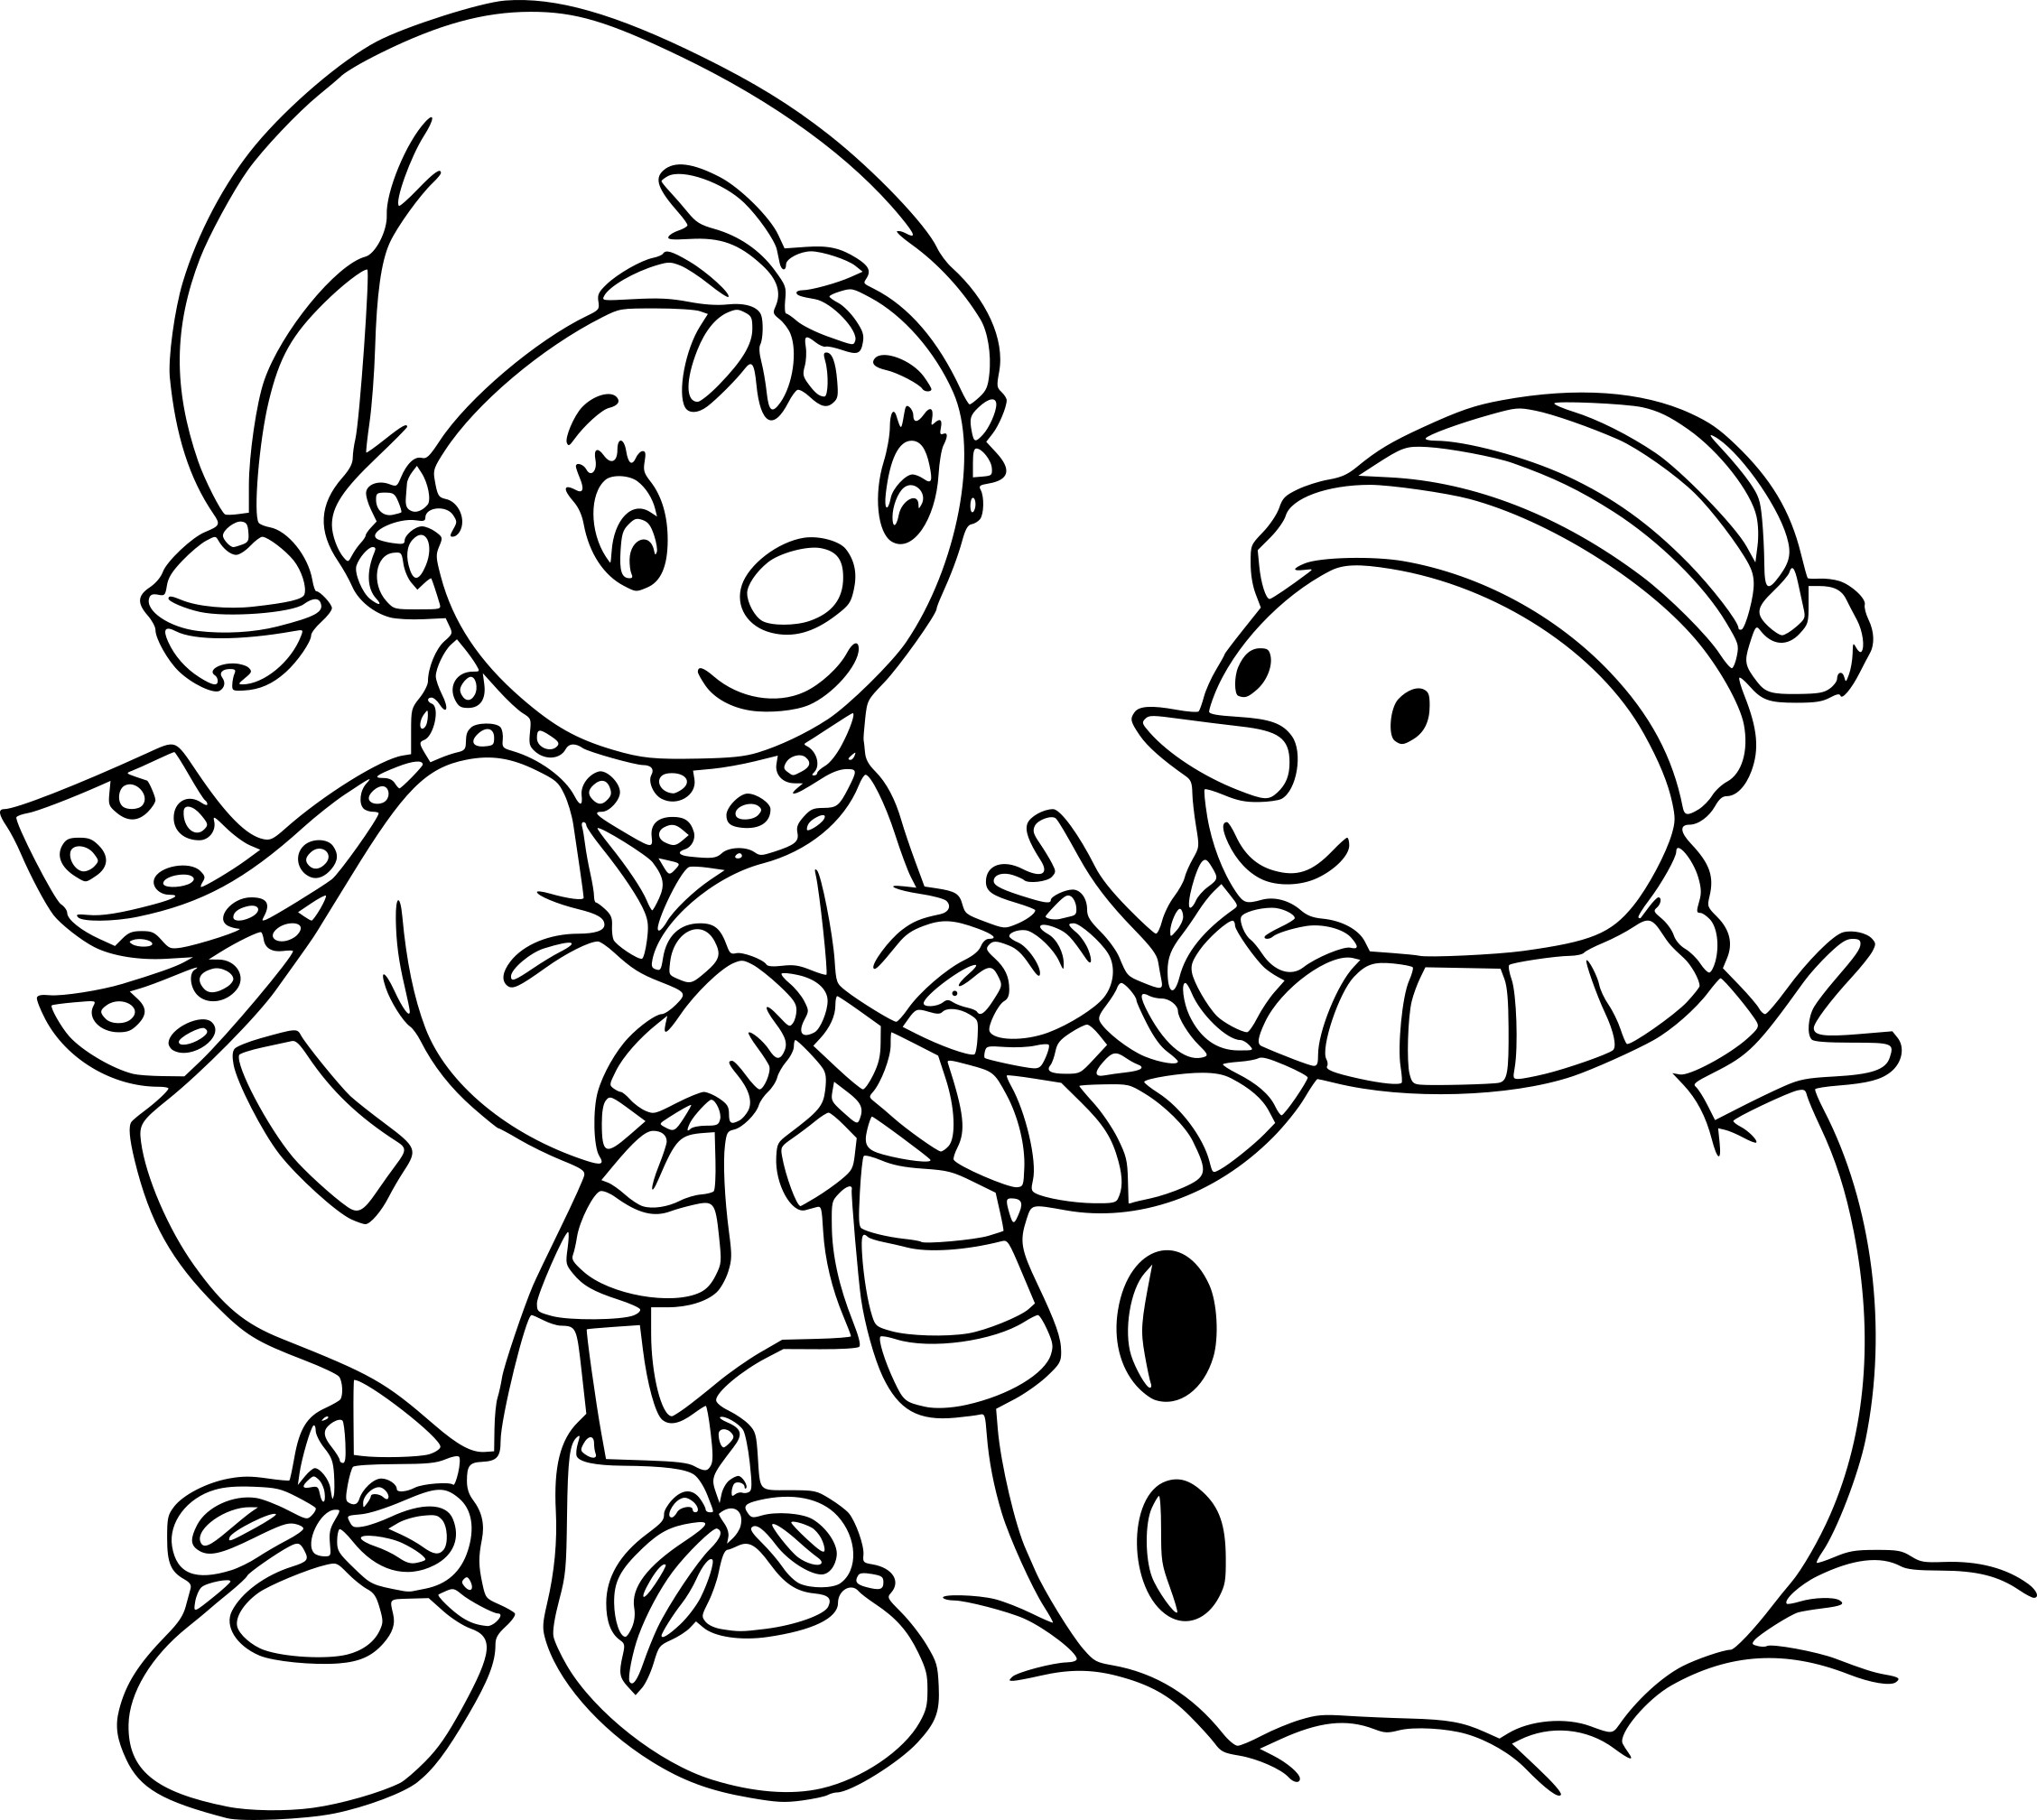 Christmas Oui Oui coloring page